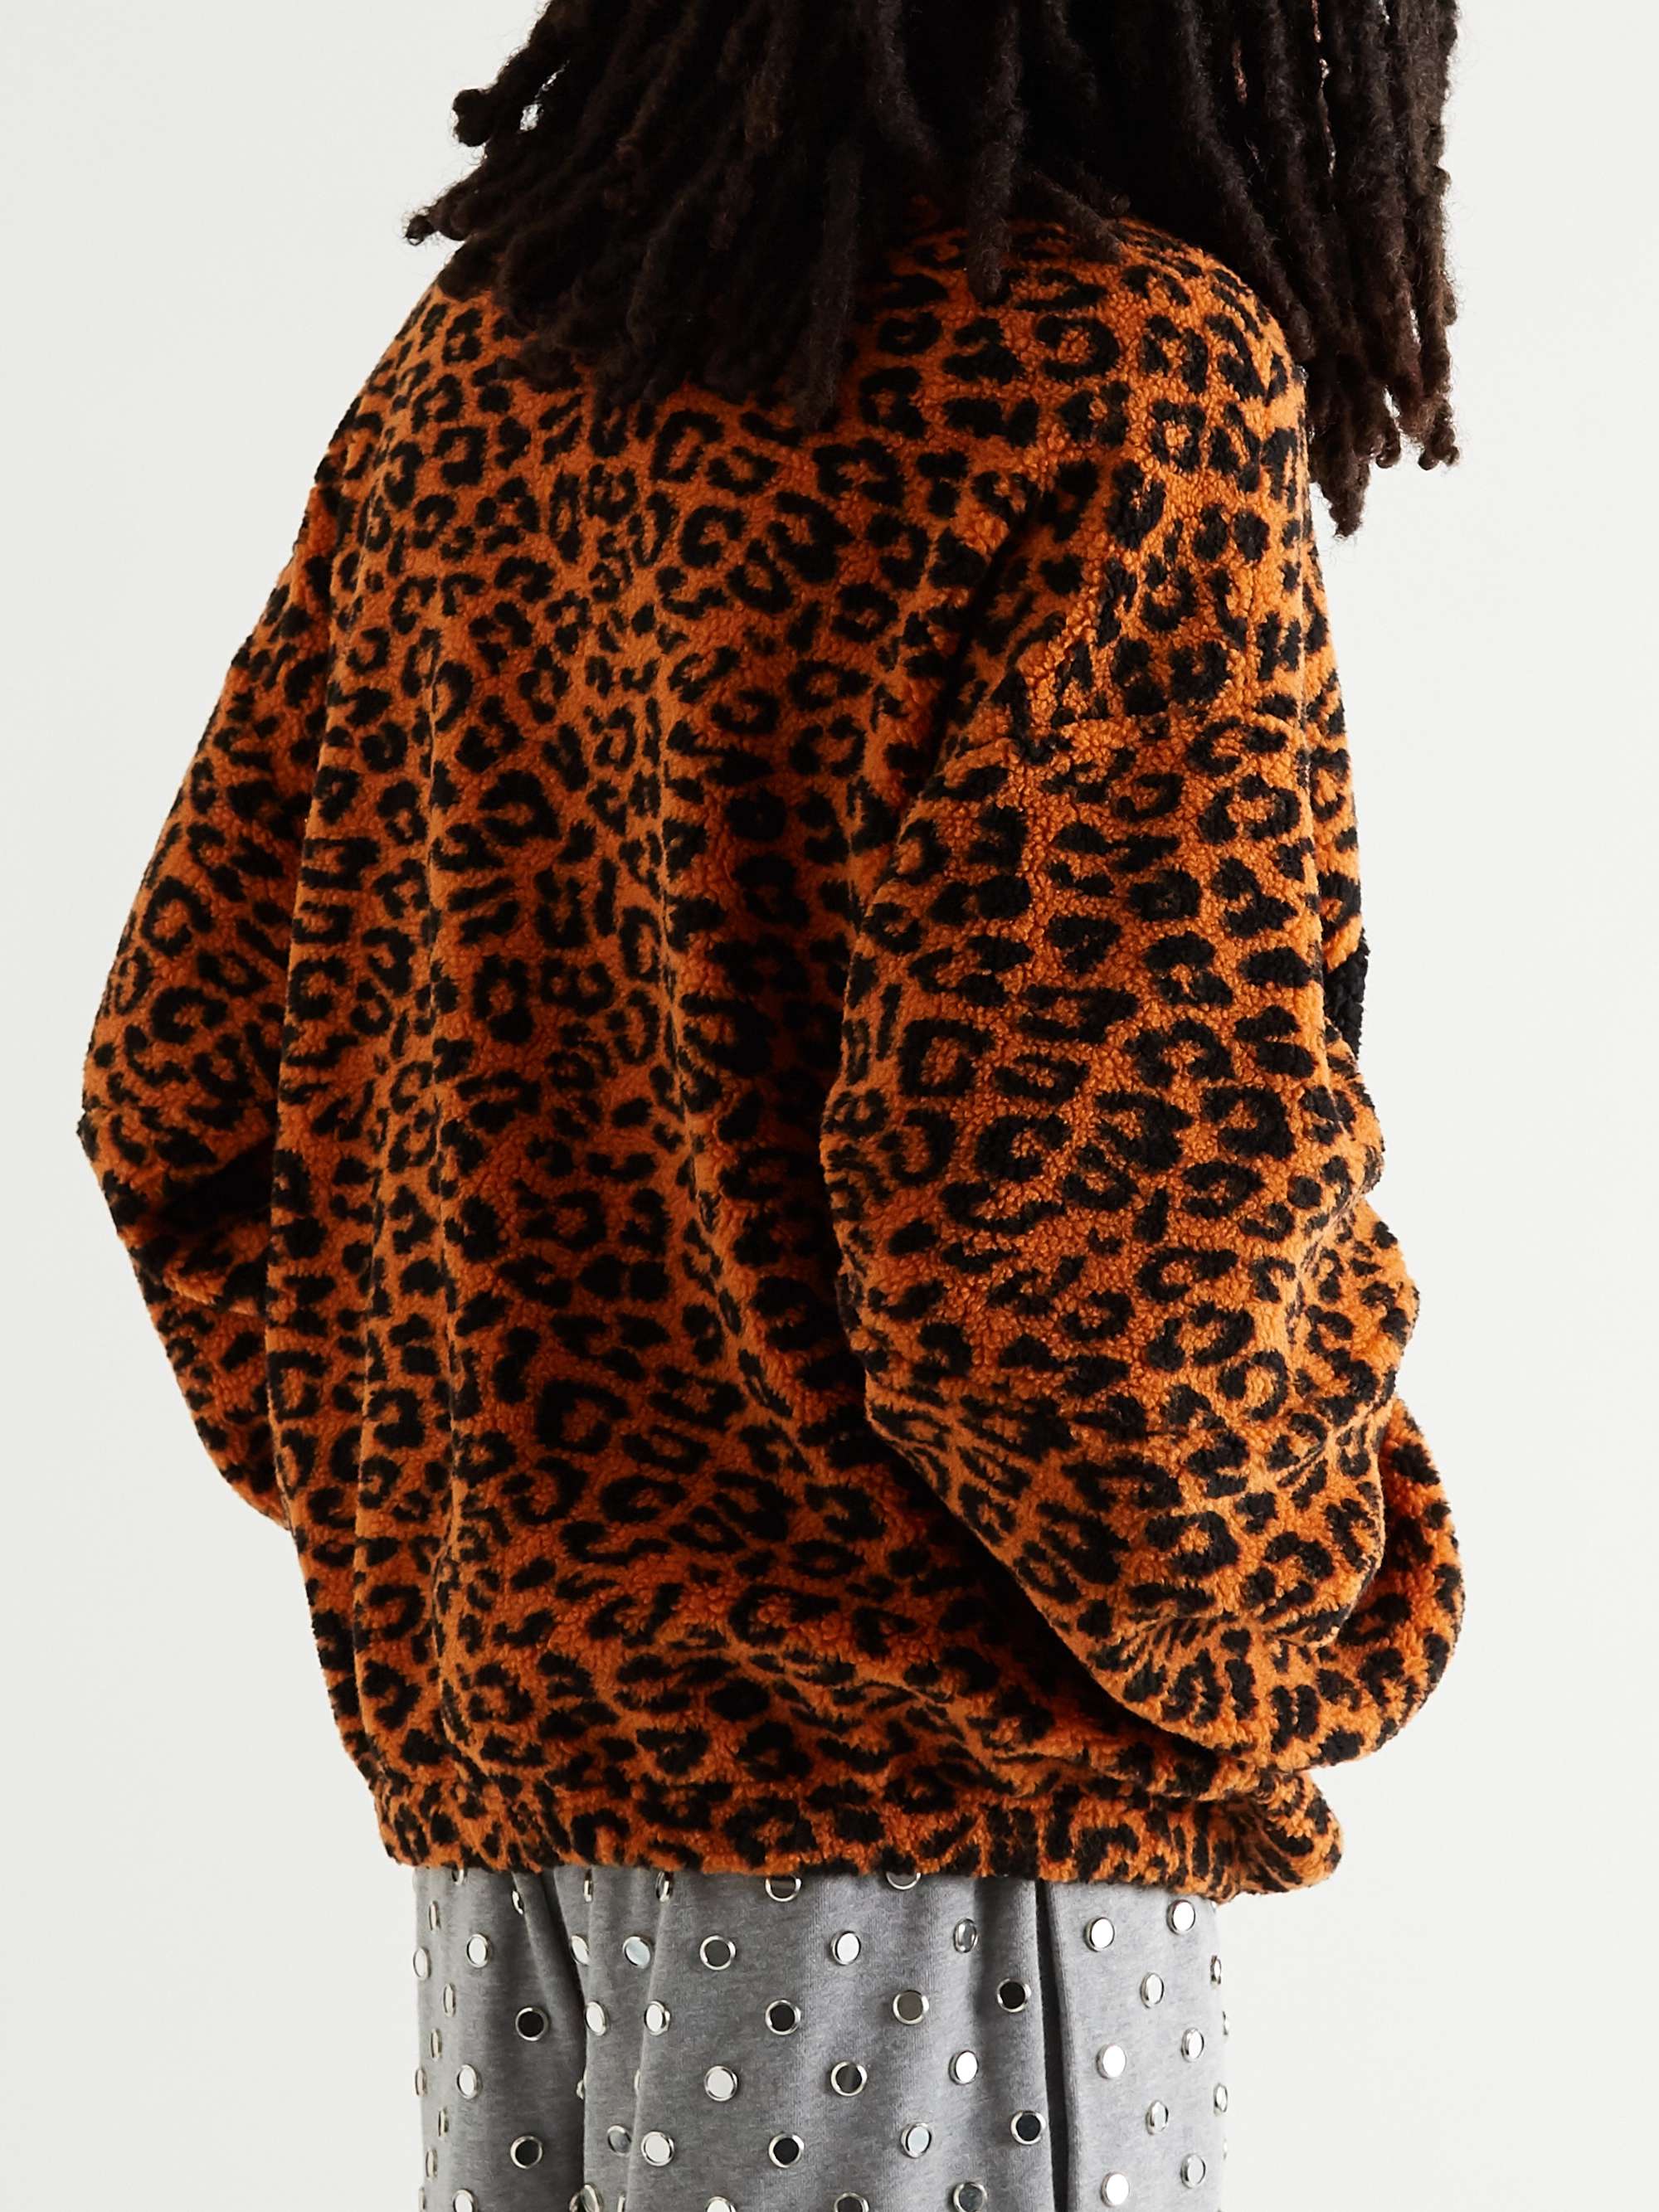 CELINE HOMME Leopard-Print Fleece Track Jacket